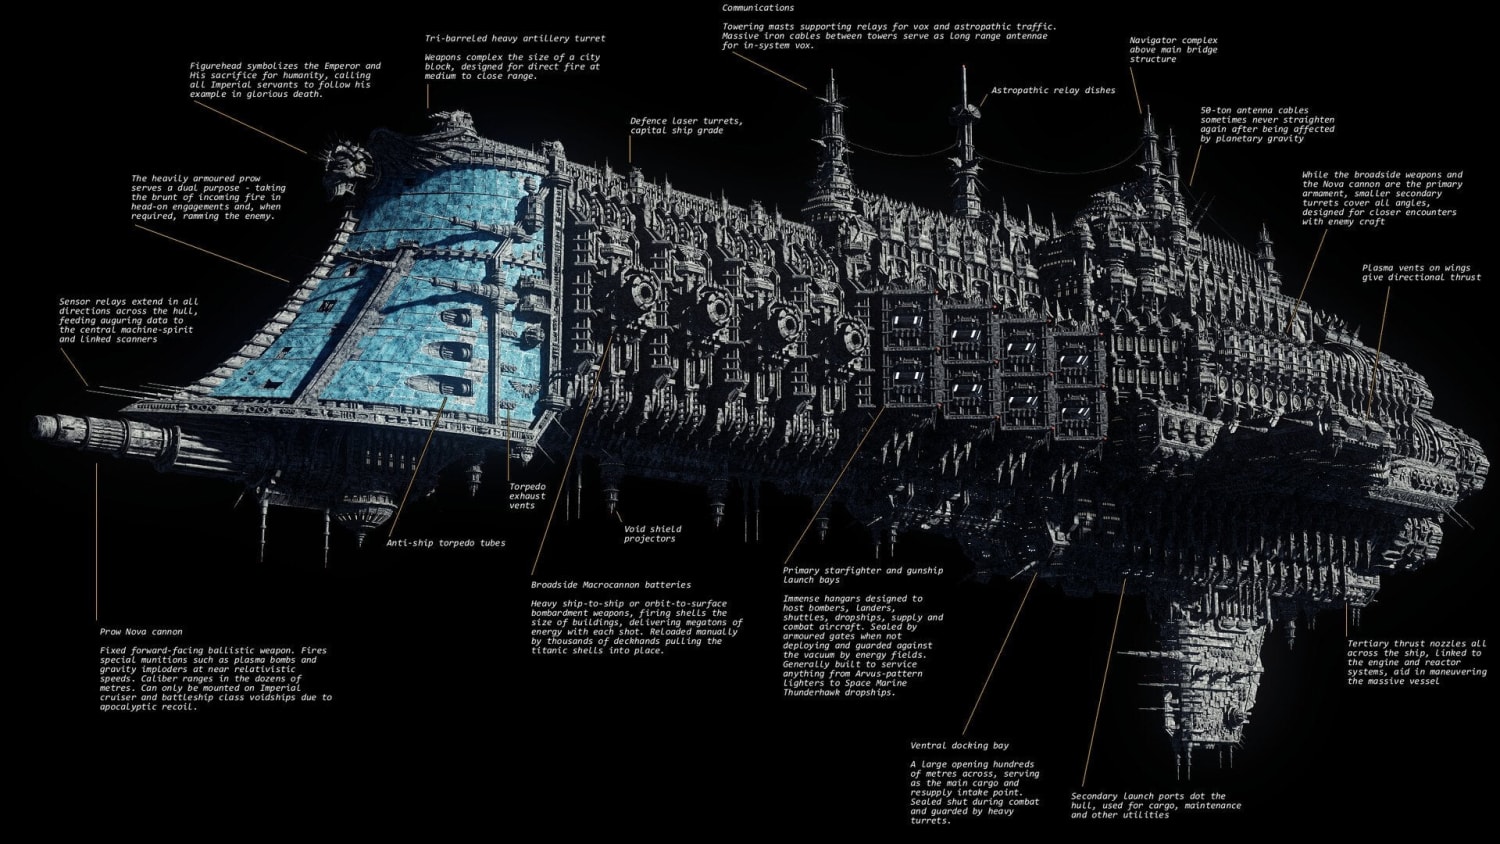 Dictator-class Imperial battlecruiser, Warhammer 40,000 by Joacim Holm